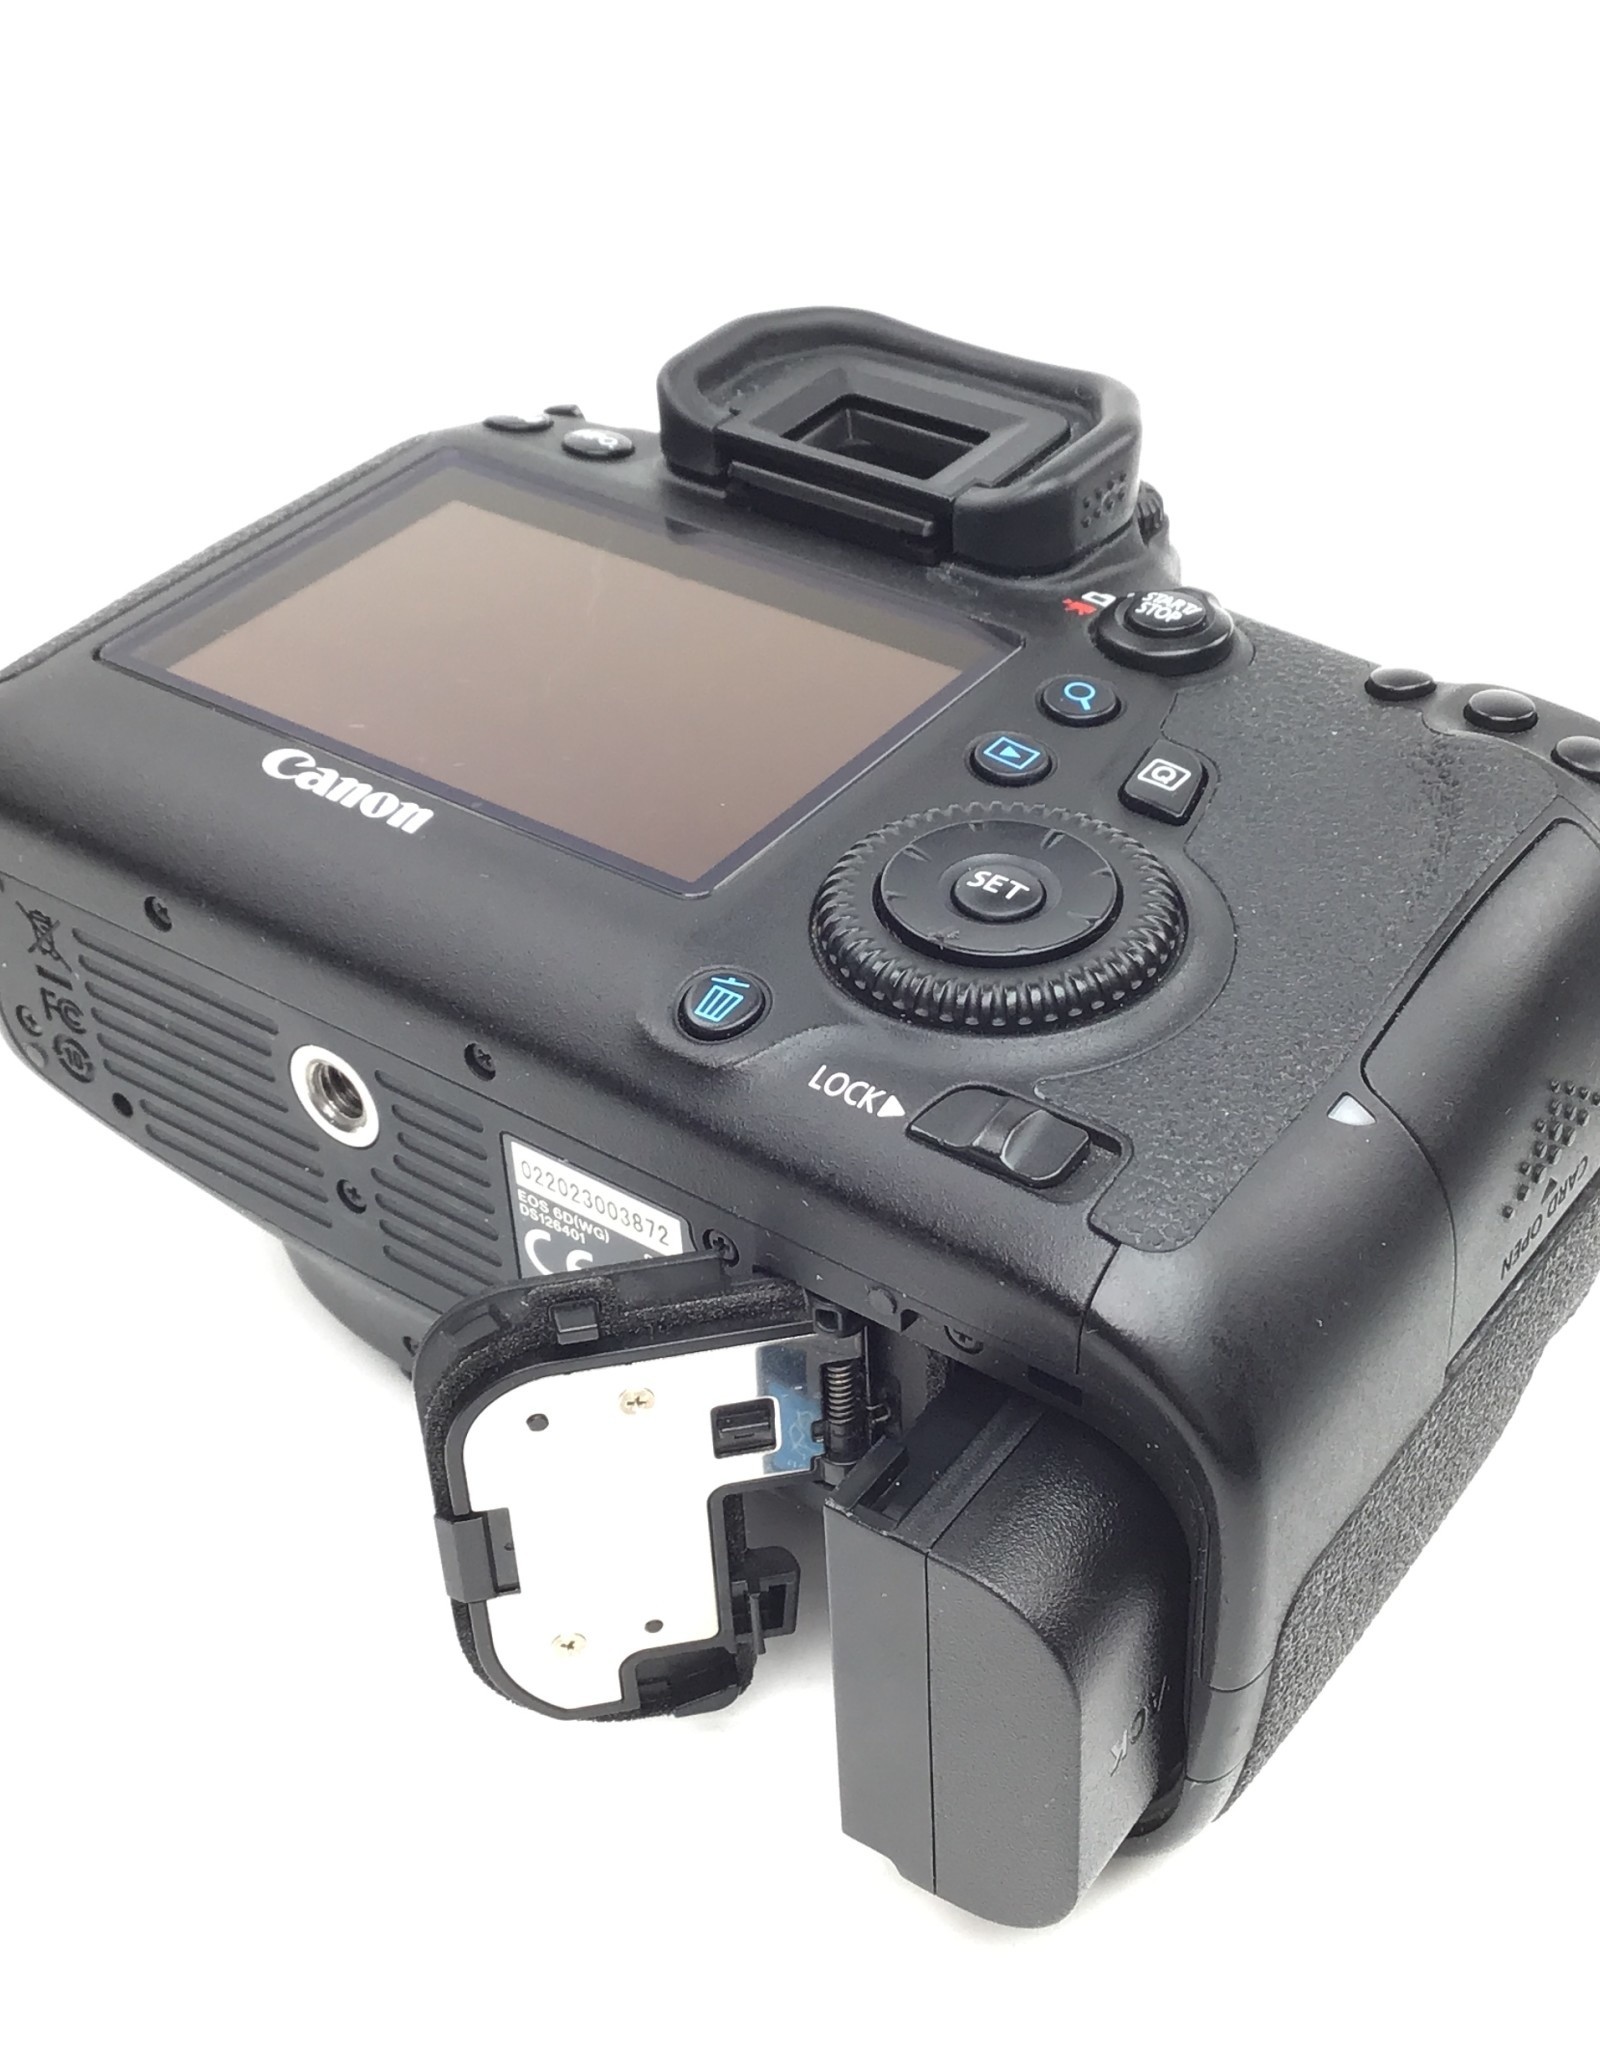 CANON Canon EOS 6D Camera Body Used Good